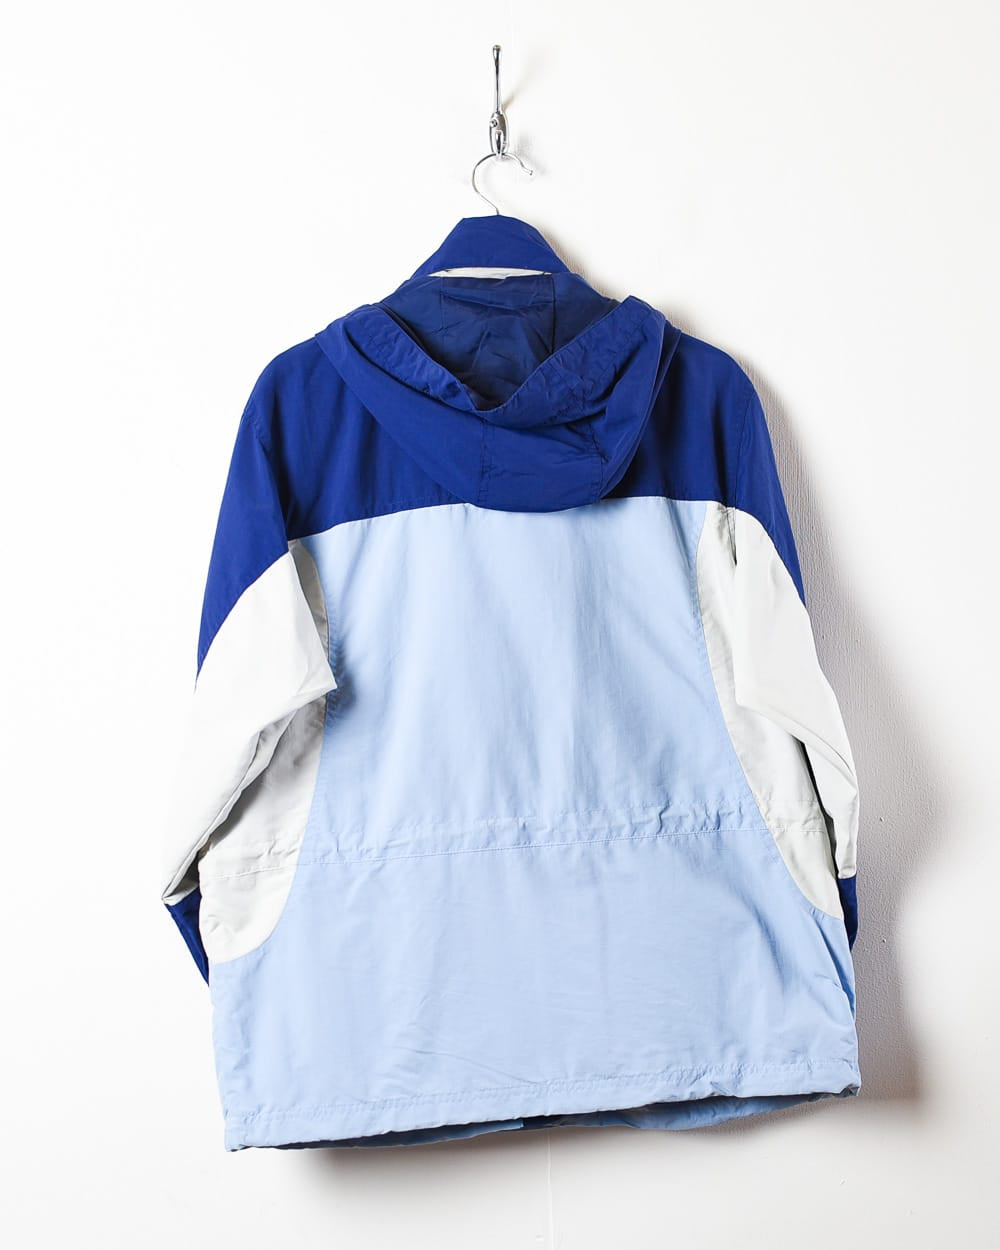 BabyBlue LL Bean Hooded Windbreaker Jacket  - Medium Women's